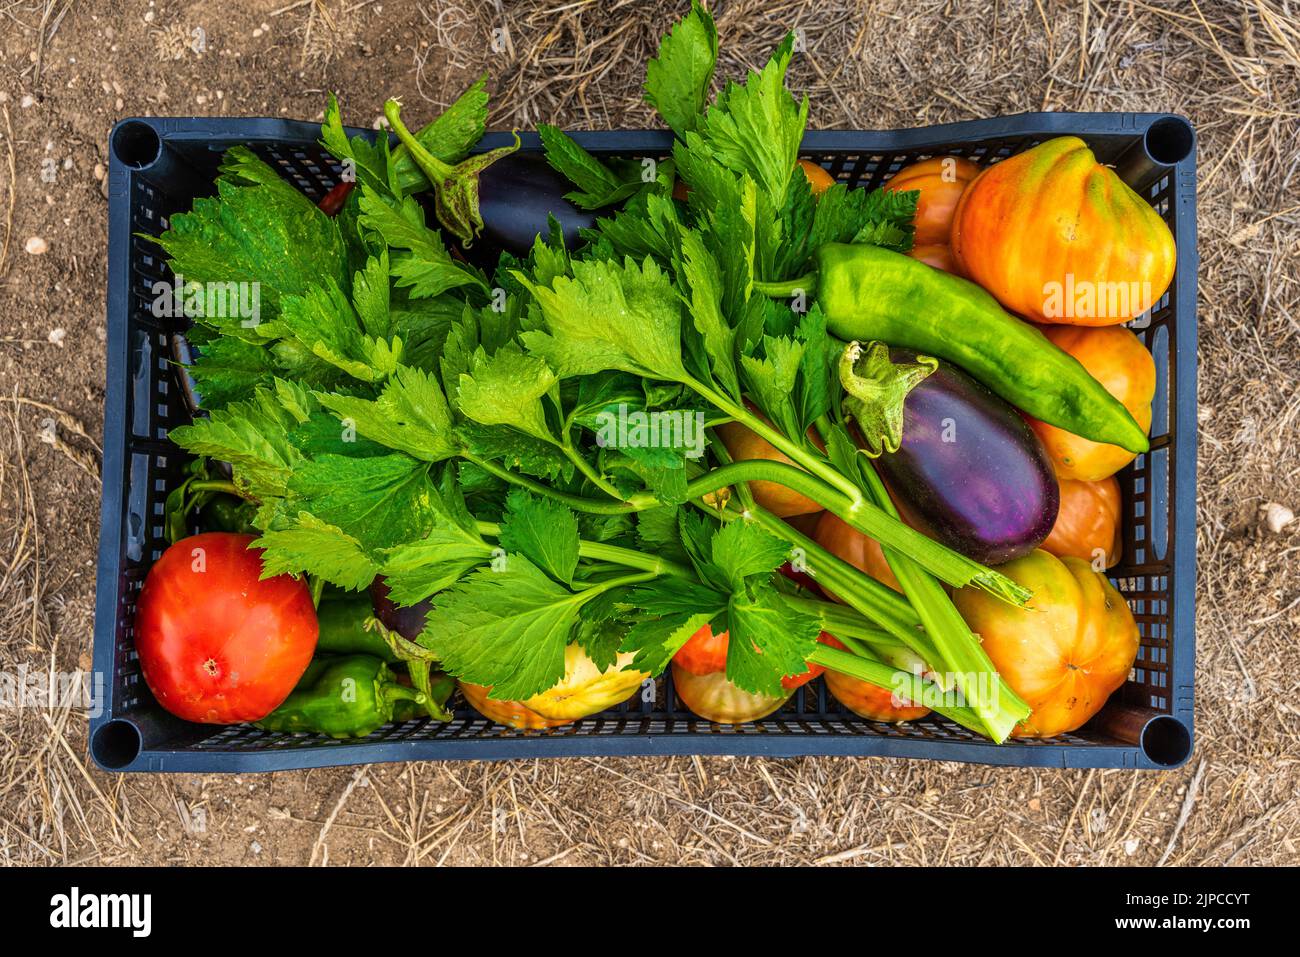 Caja de verduras, tomate, apio, pimienta y berenjena. Verduras de jardín orgánico. Abruzos, Italia, Europa Foto de stock